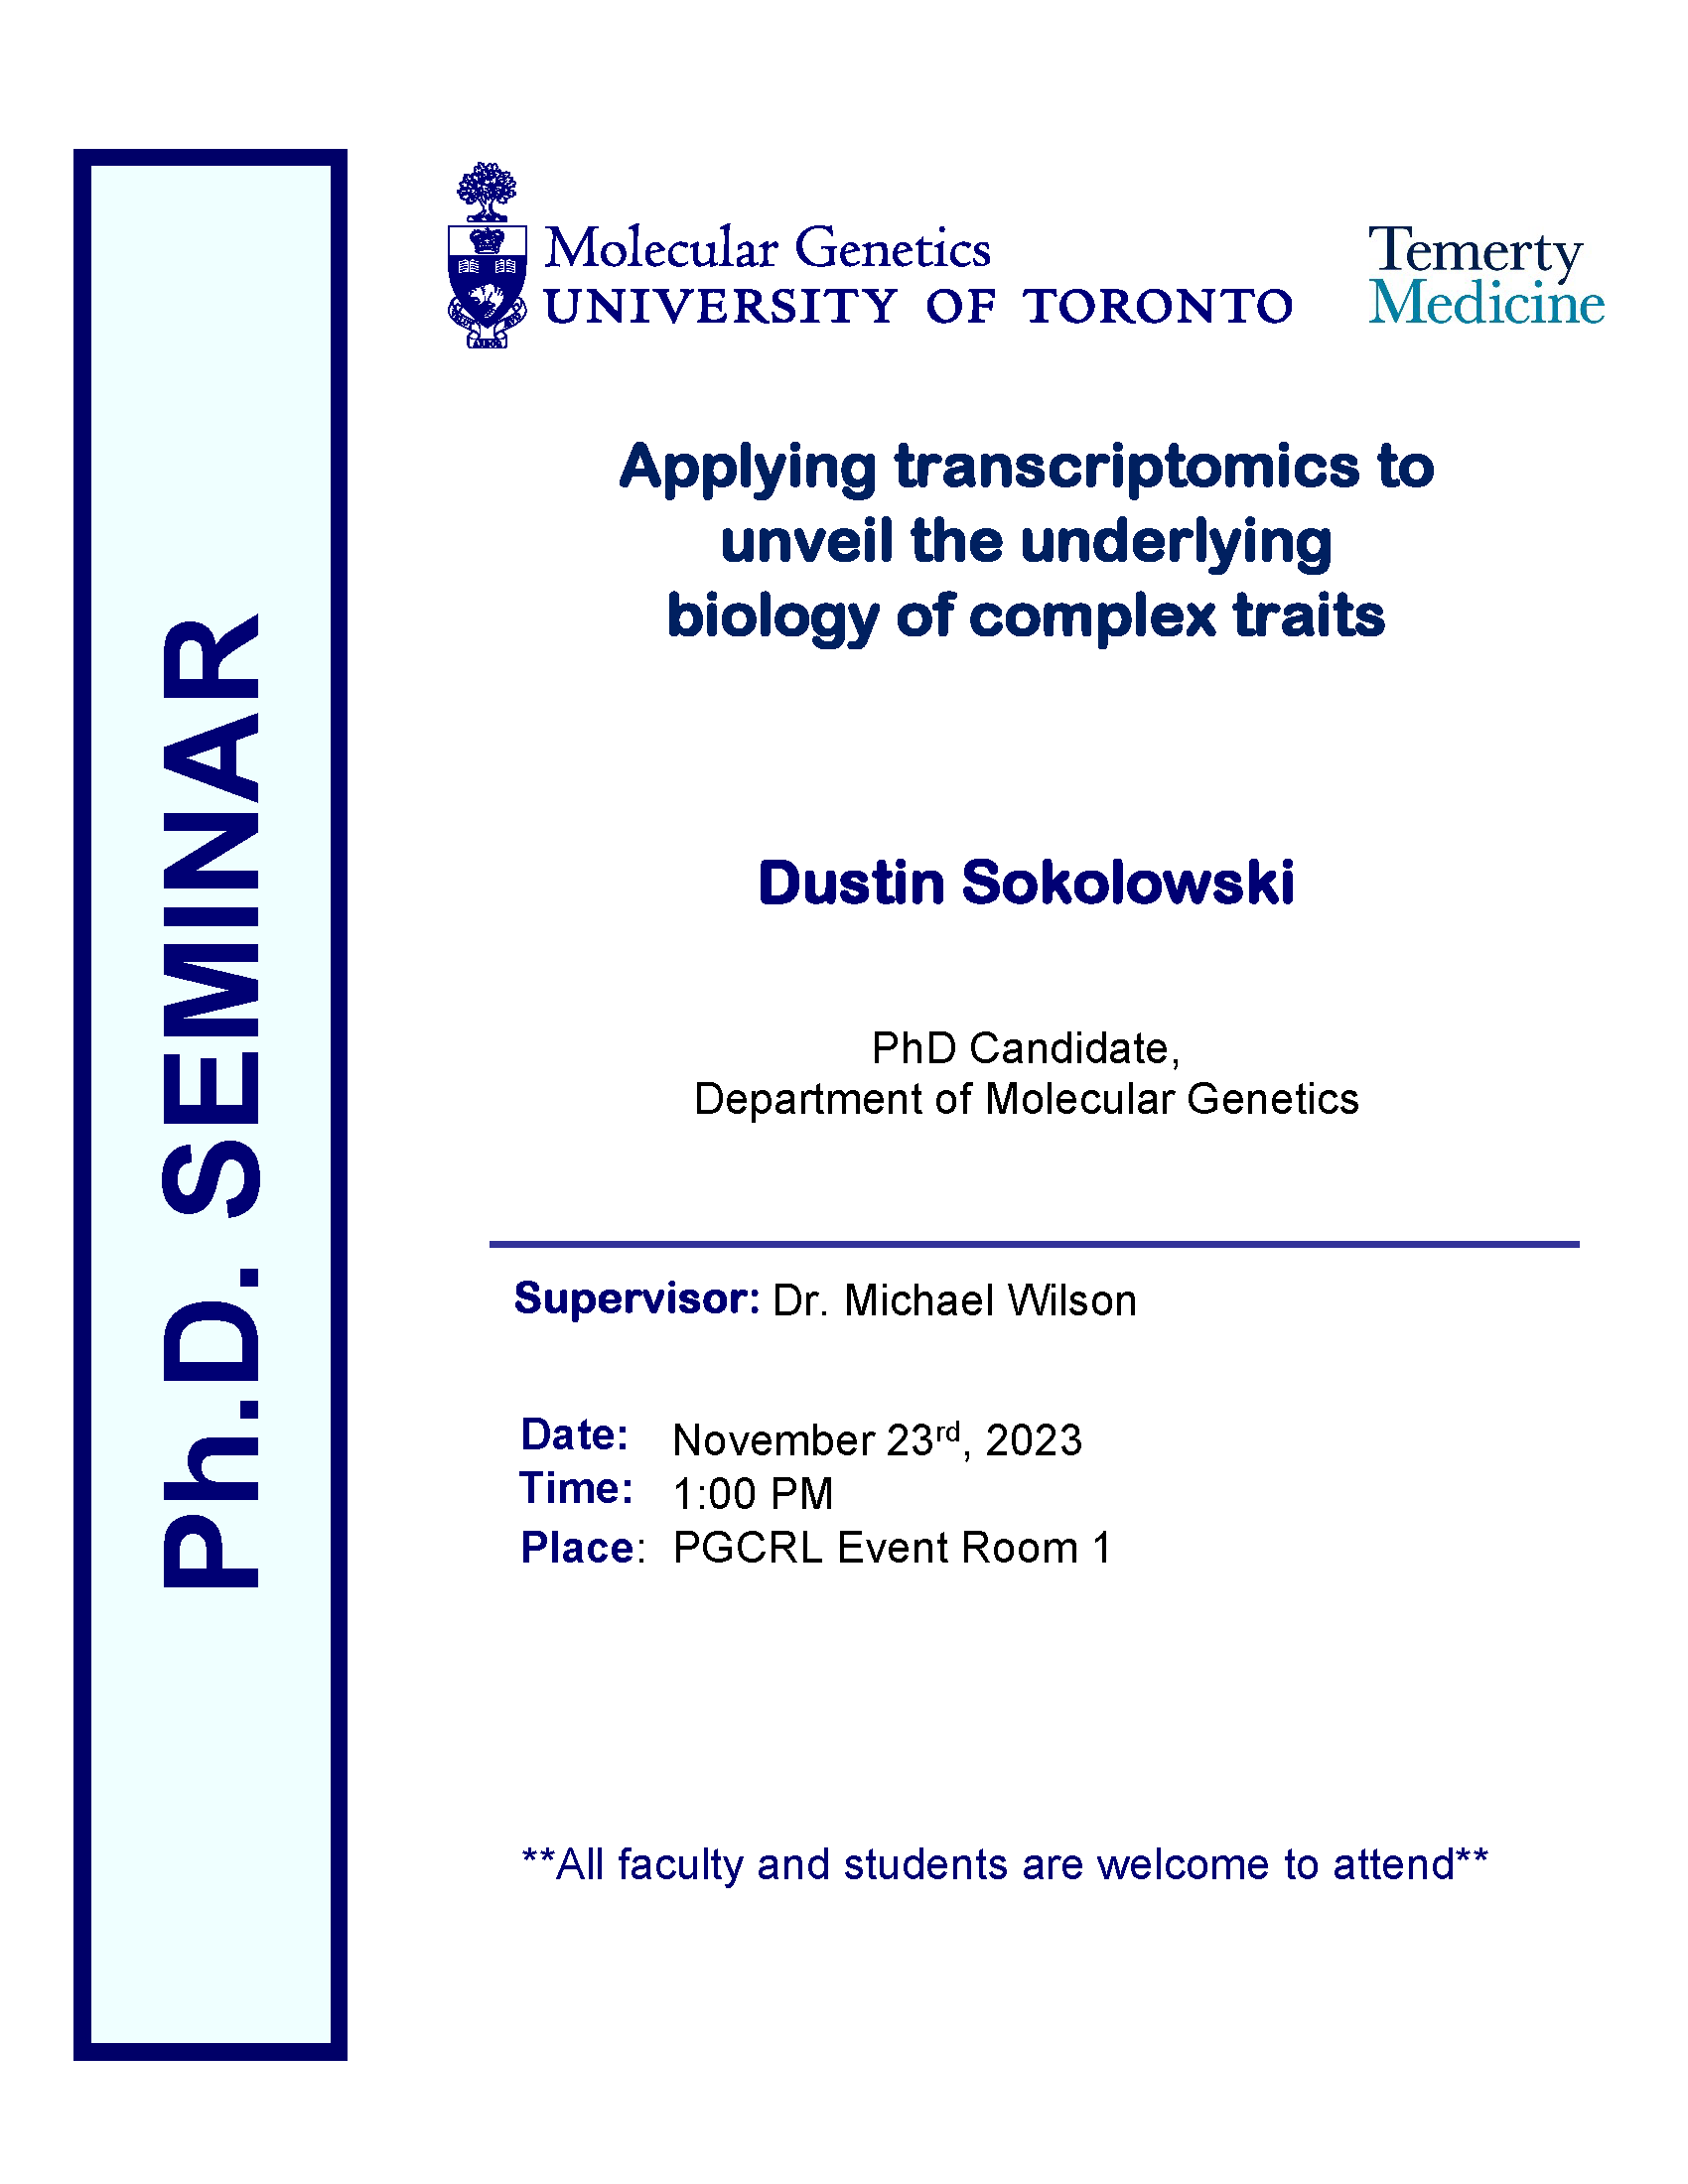 Public Seminar -  Dustin Sokolowski